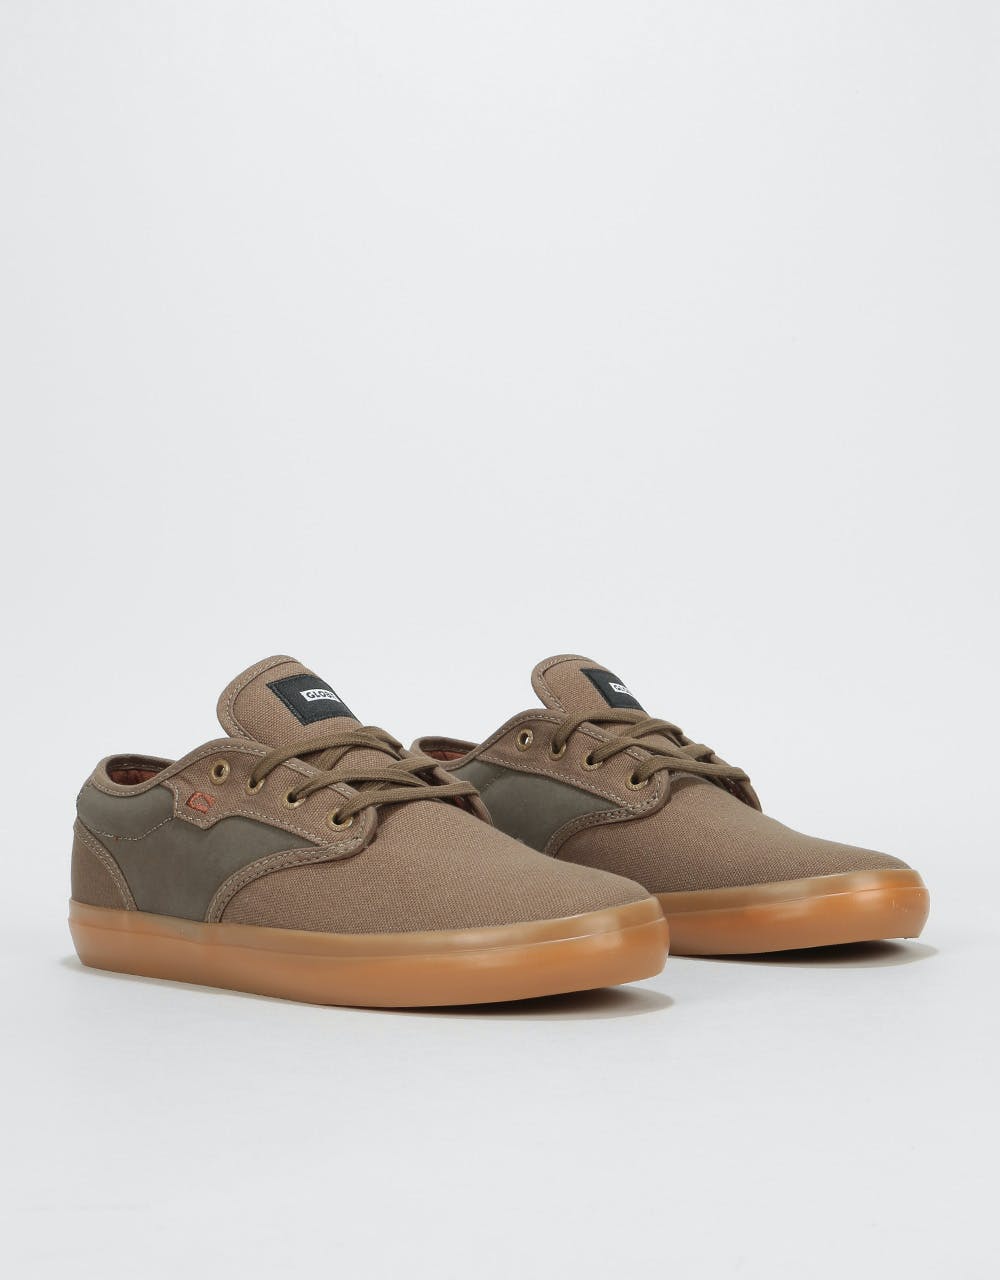 Globe Motley Skate Shoes - Olive Brown/Gum